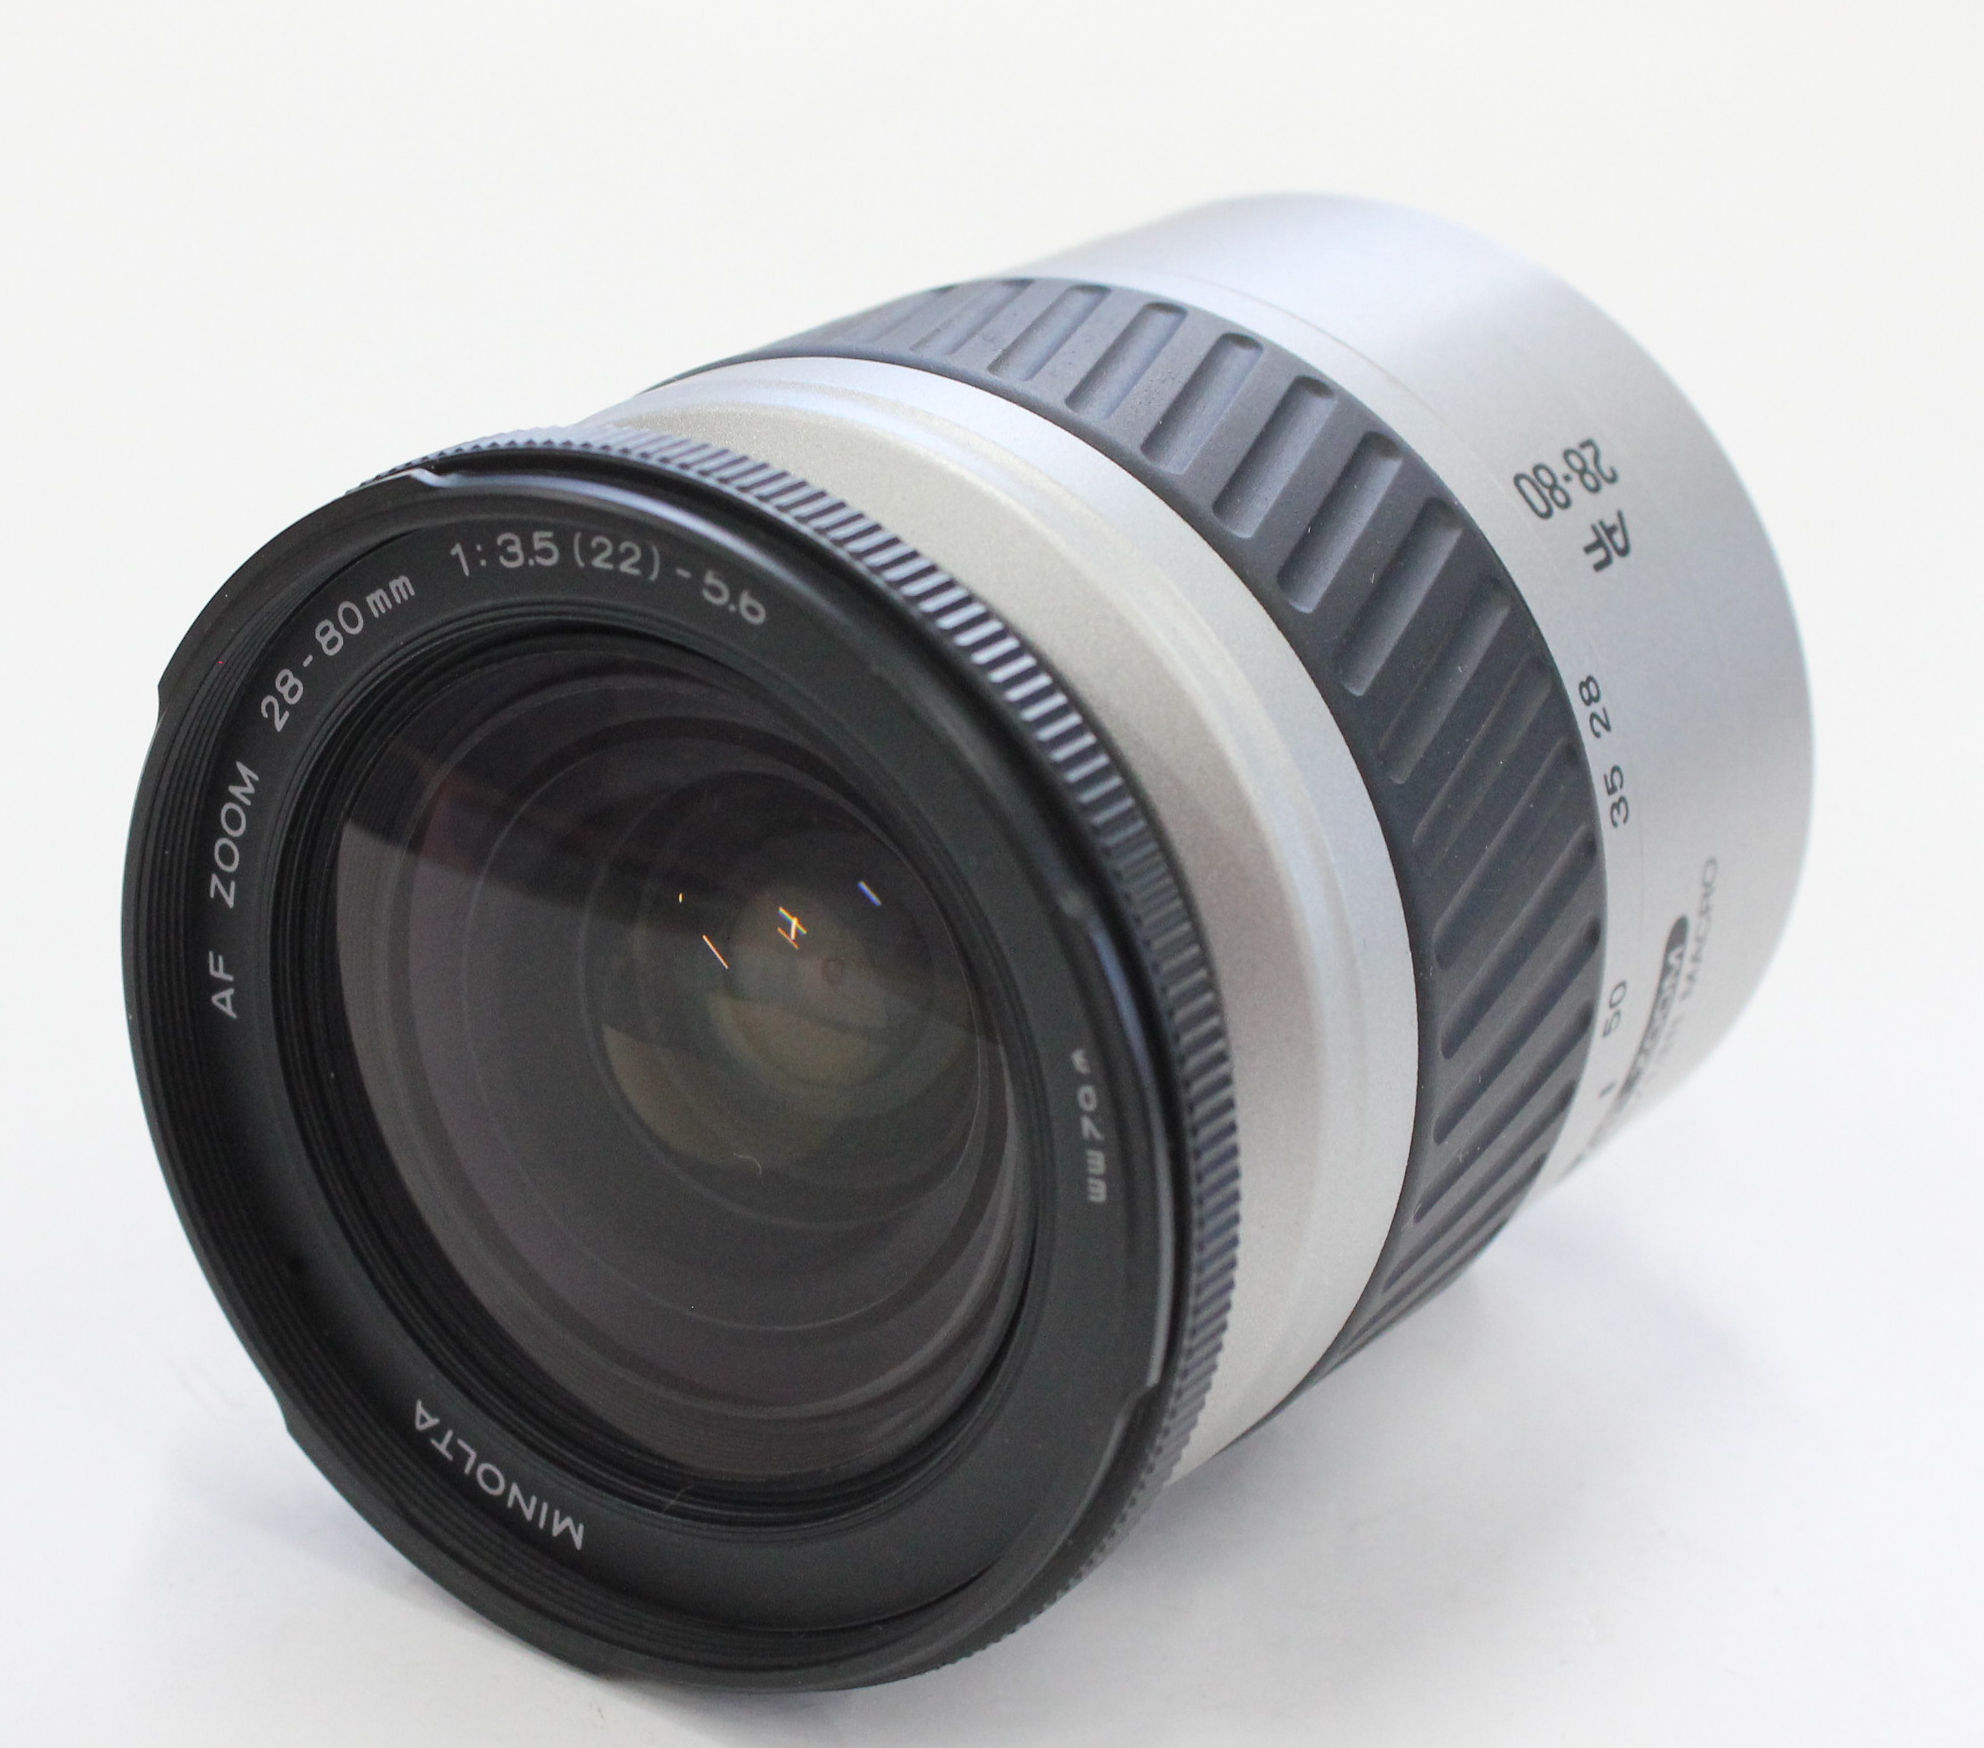  MINOLTA AF ZOOM 28-80mm F/3.5-5.6 A-Mount Lens for Minolta or Sony Photo 0